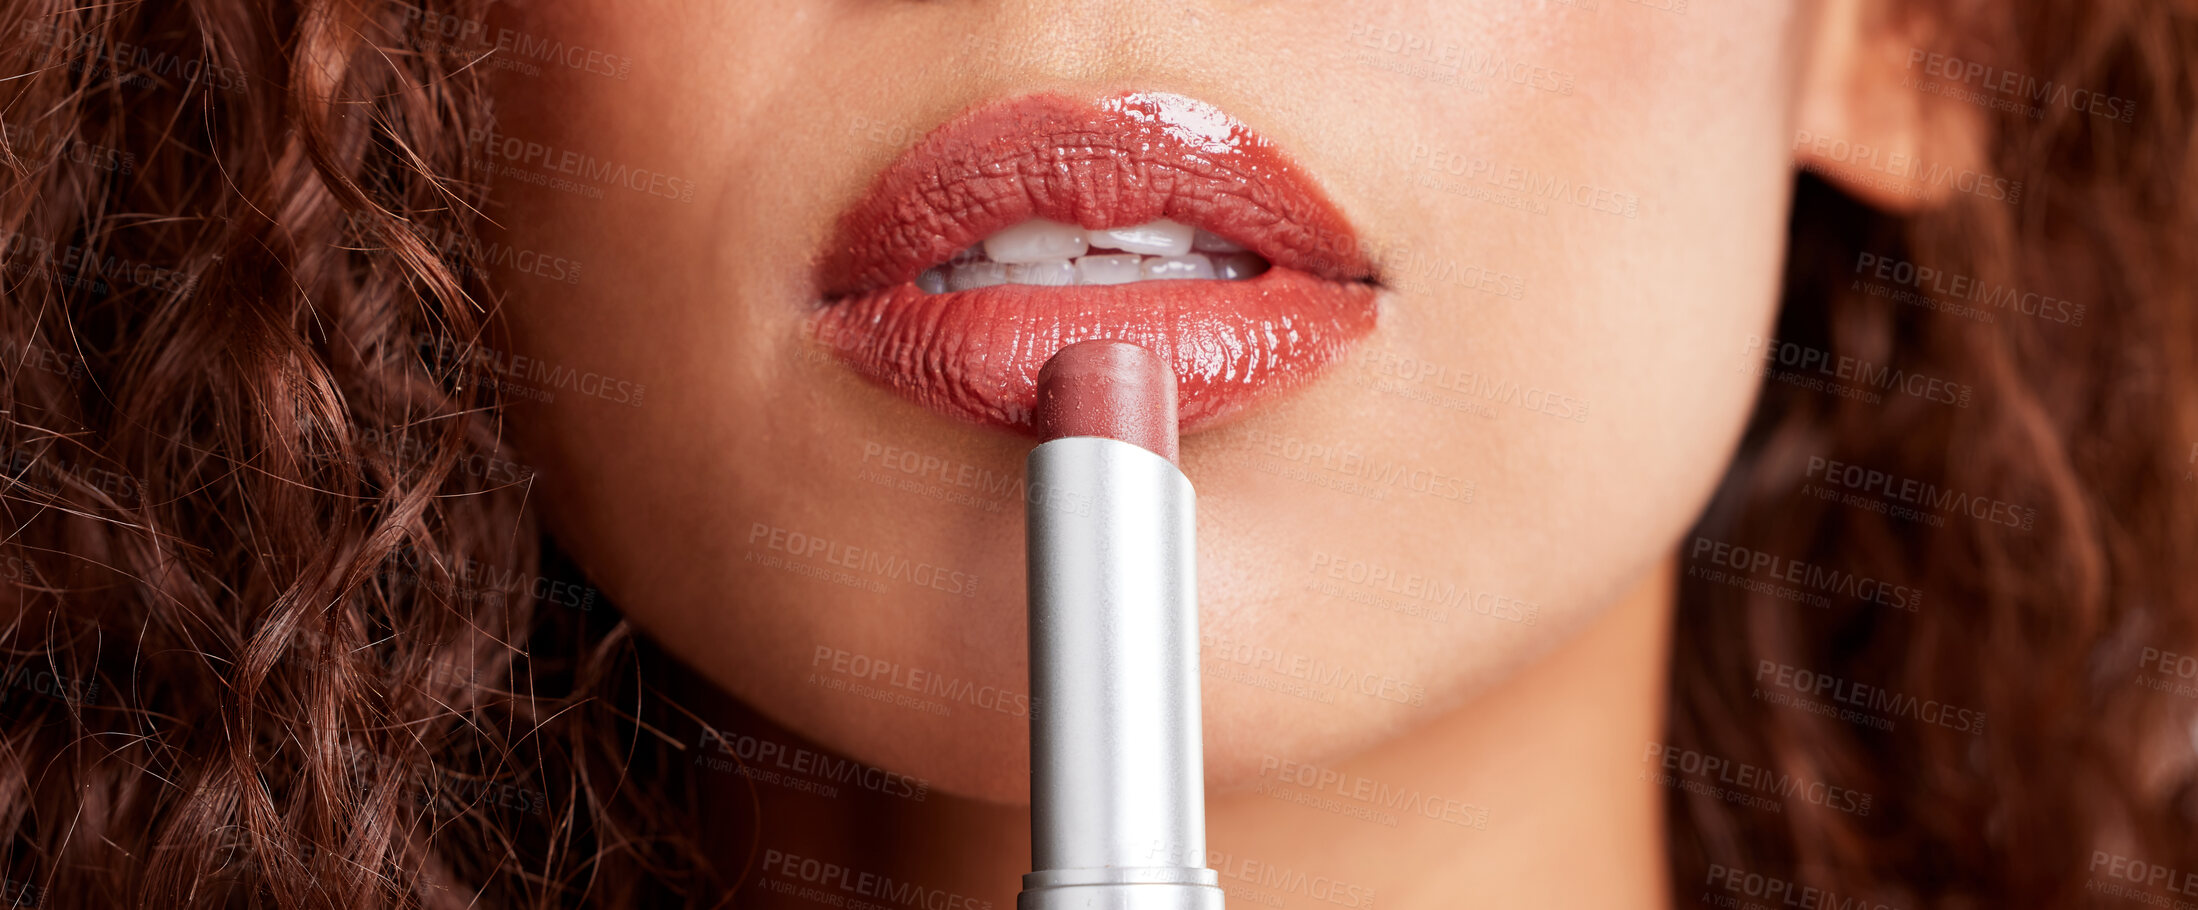 Buy stock photo Closeup shot of a young woman applying lipstick